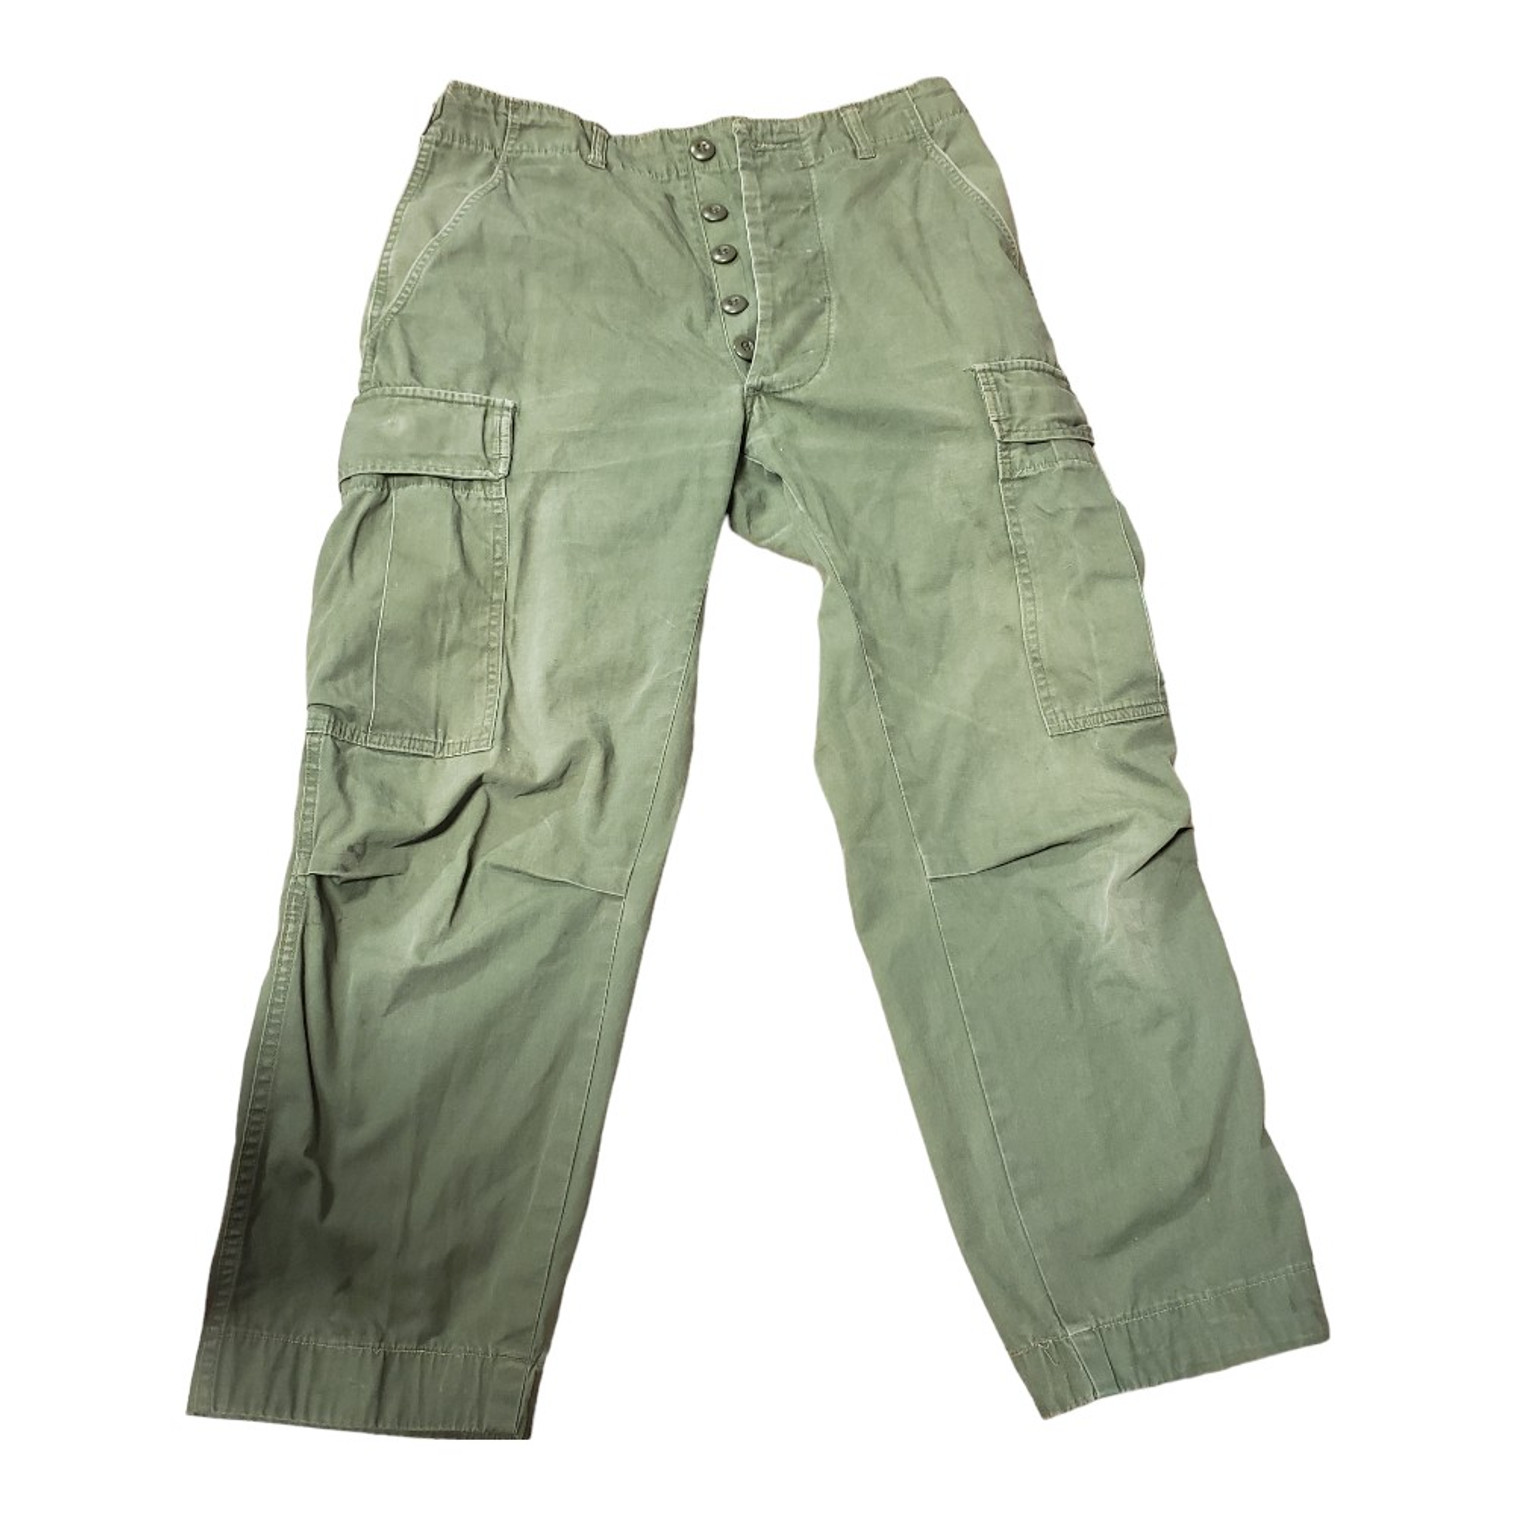 Vietnam OG 107 Rip Stop Tropical/Jungle Combat Pants